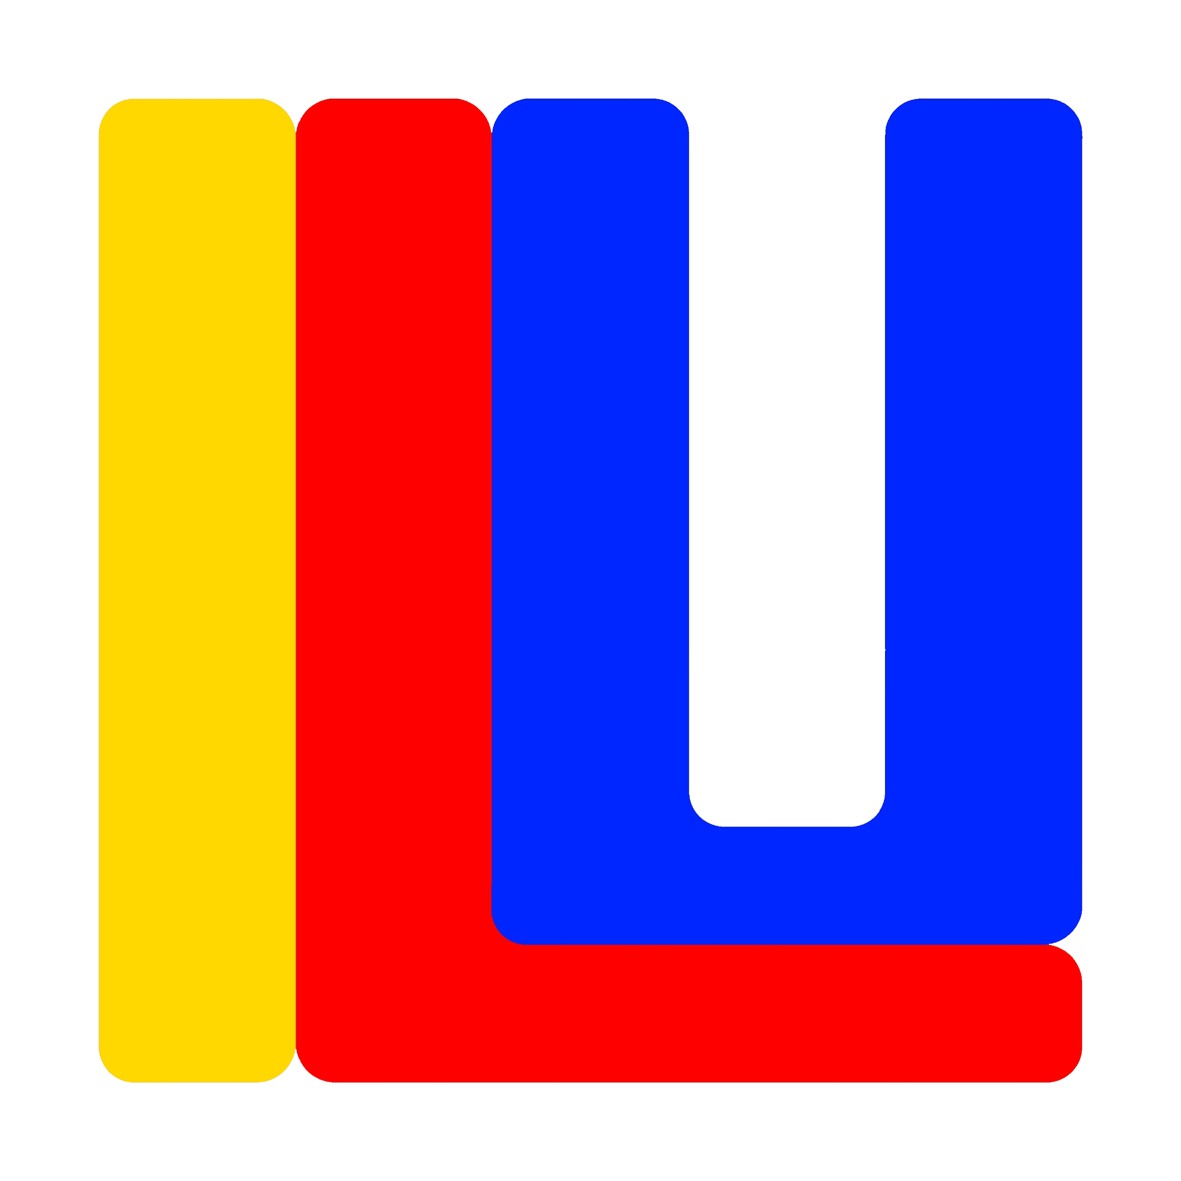 button ILU above logo